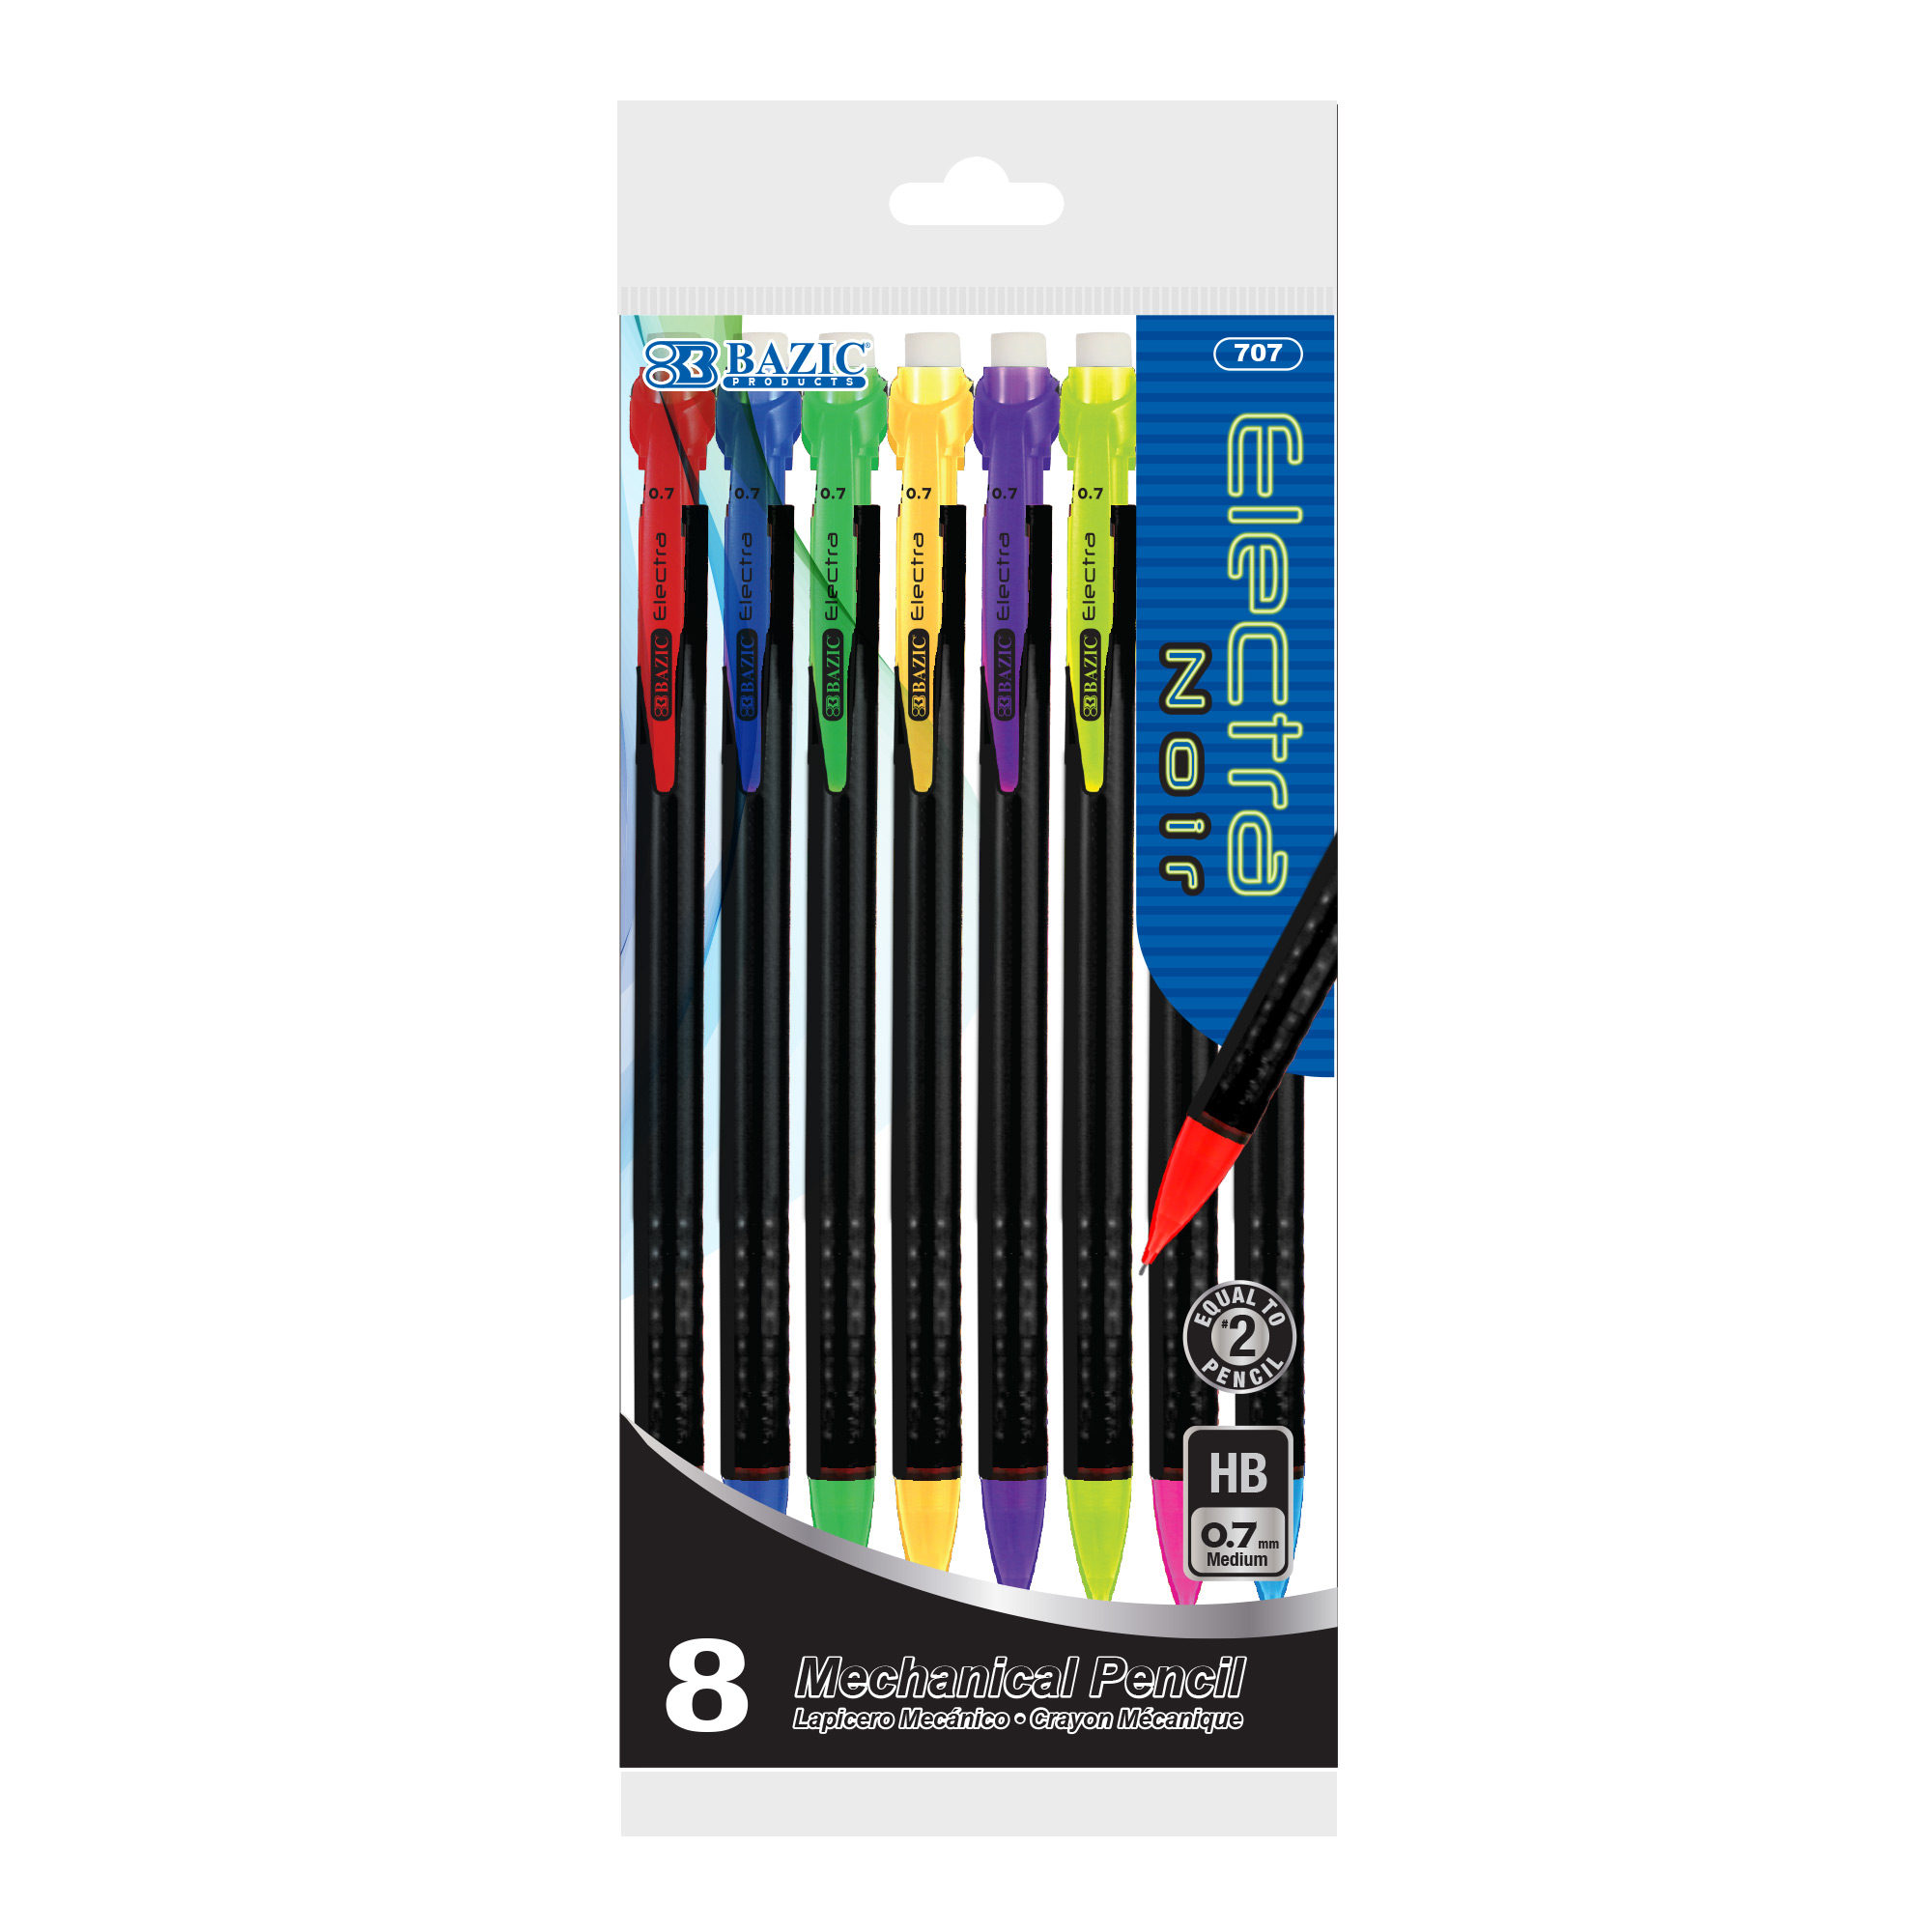 Bazic Products Bazic 8 Neon Colored Pencils / Box Qty - 24